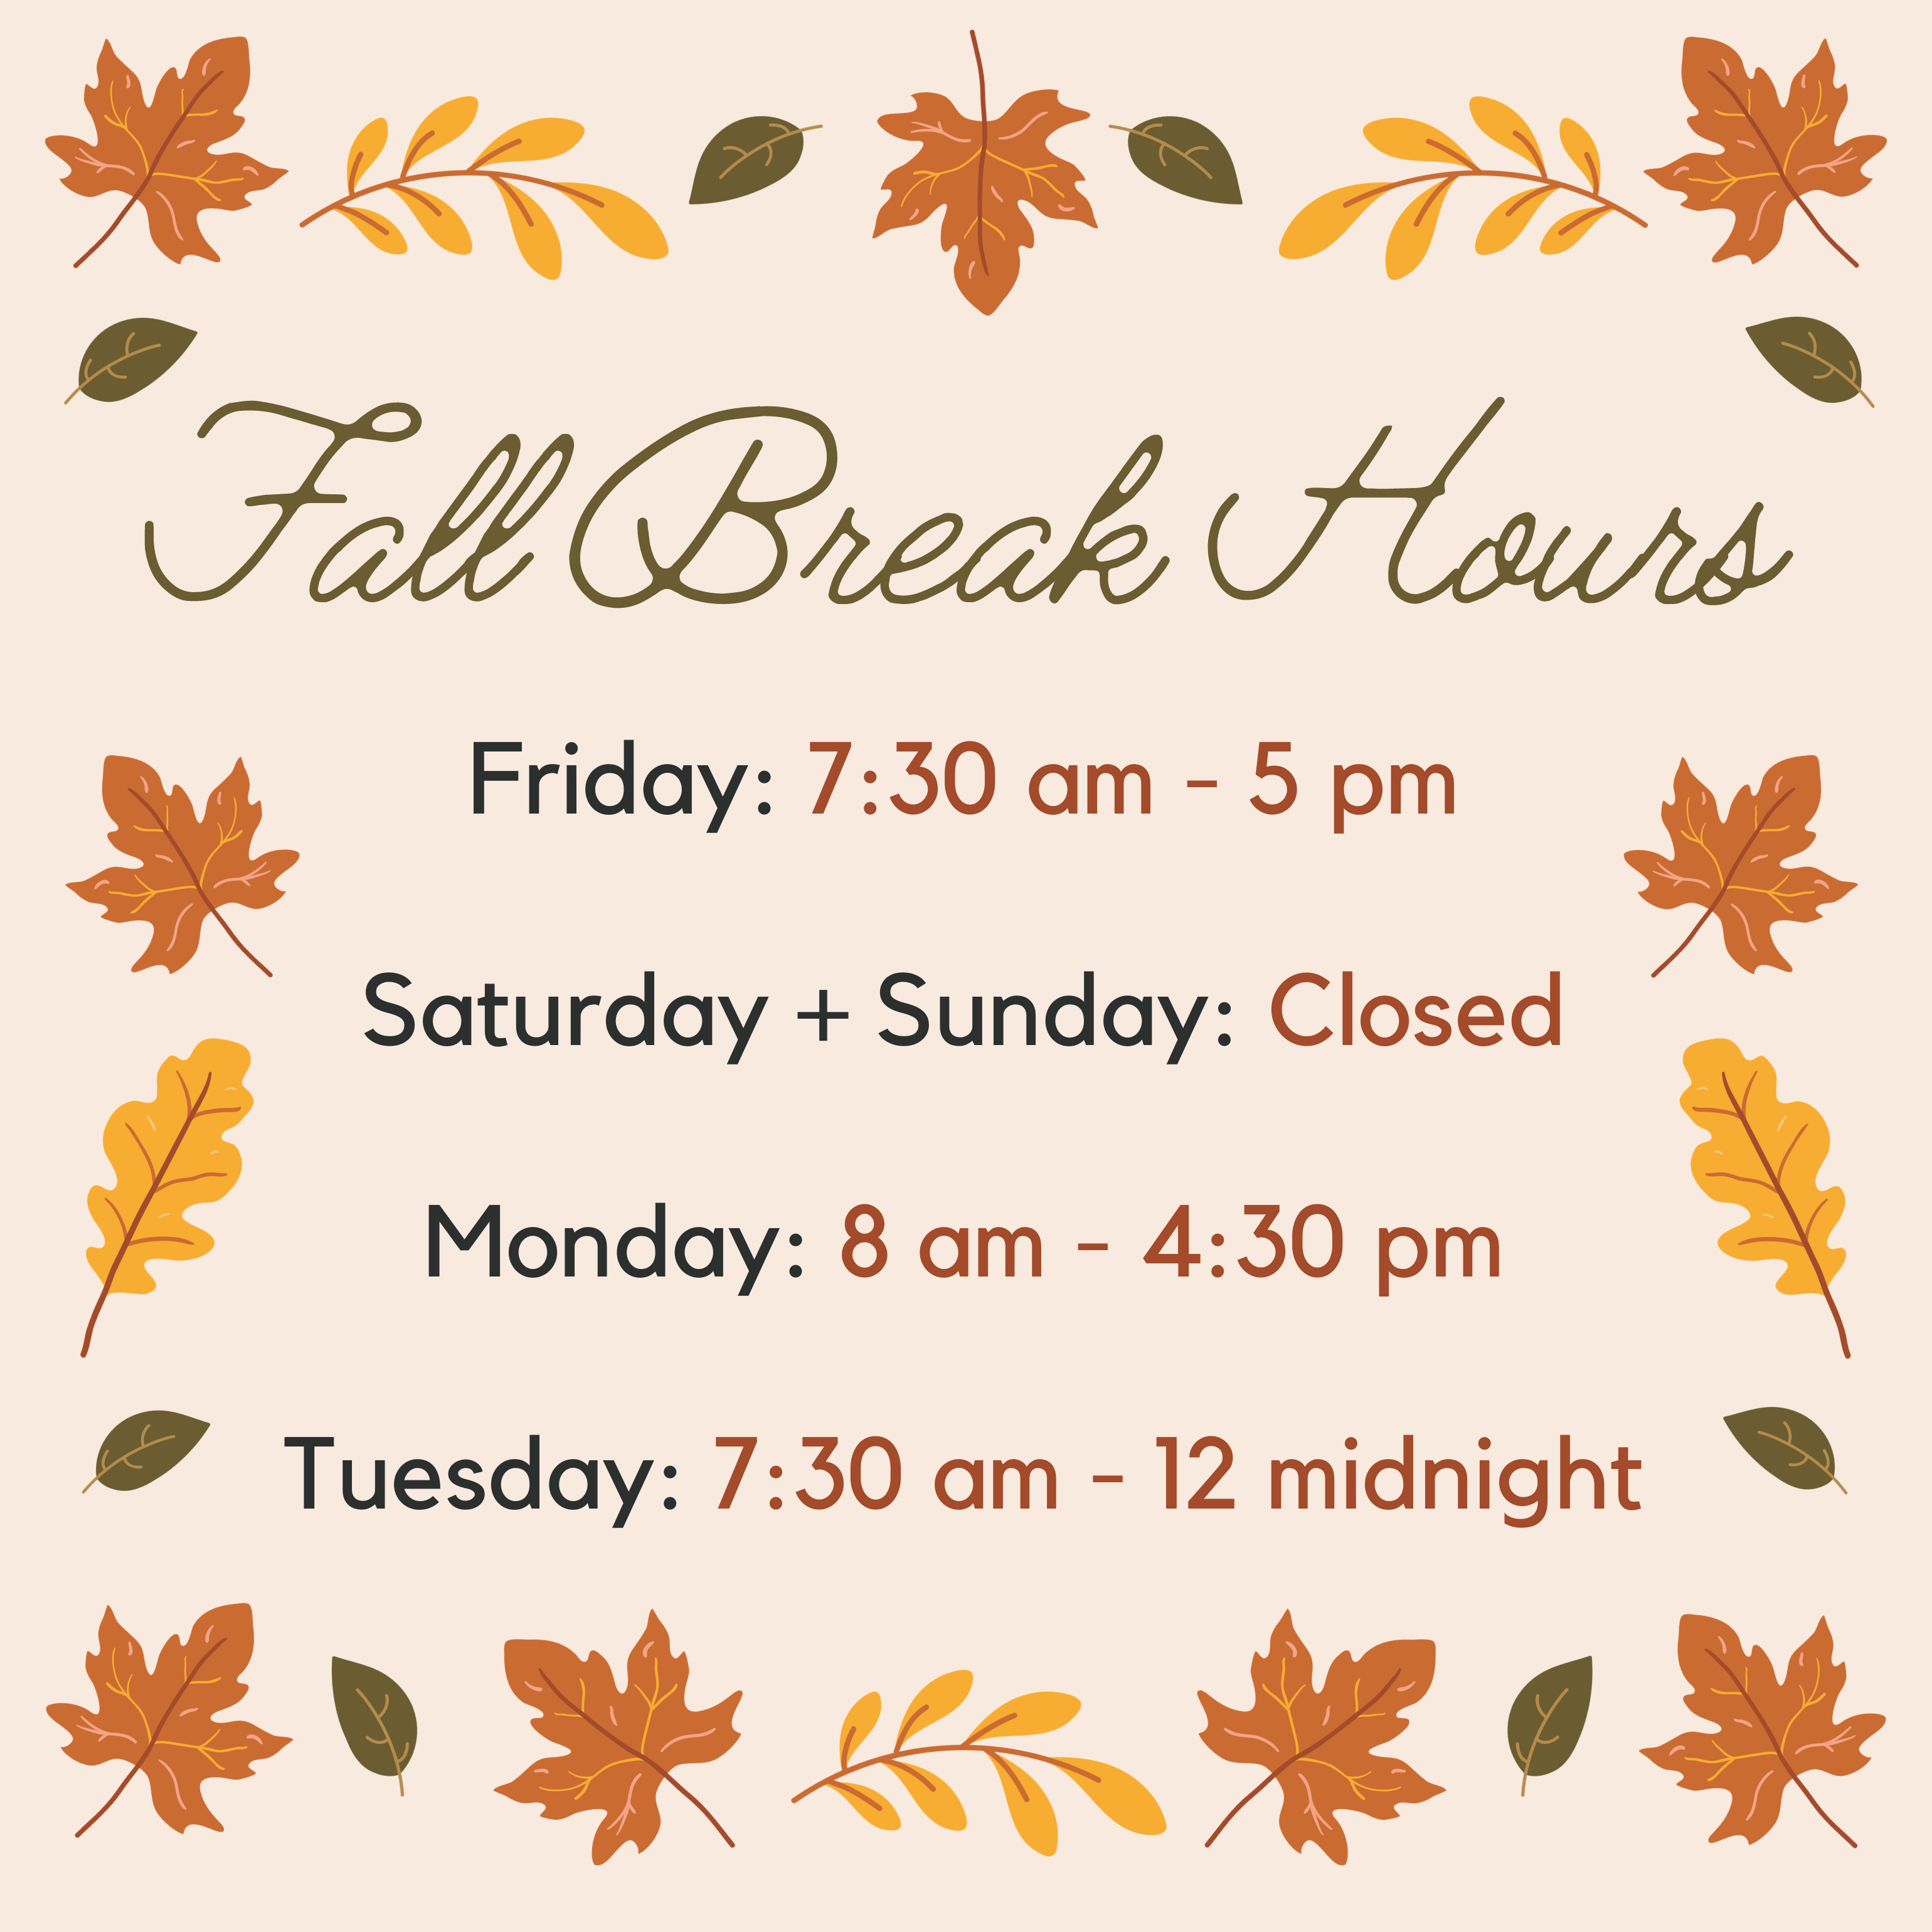 Fall Break Hours: Friday, October 13: 7:30 am - 5 pm; Saturday, October 14 + Sunday, October 15: Closed; Monday, October 16: 8 am - 4:30 pm; Tuesday, October 17: 7:30 am - 12 midnight